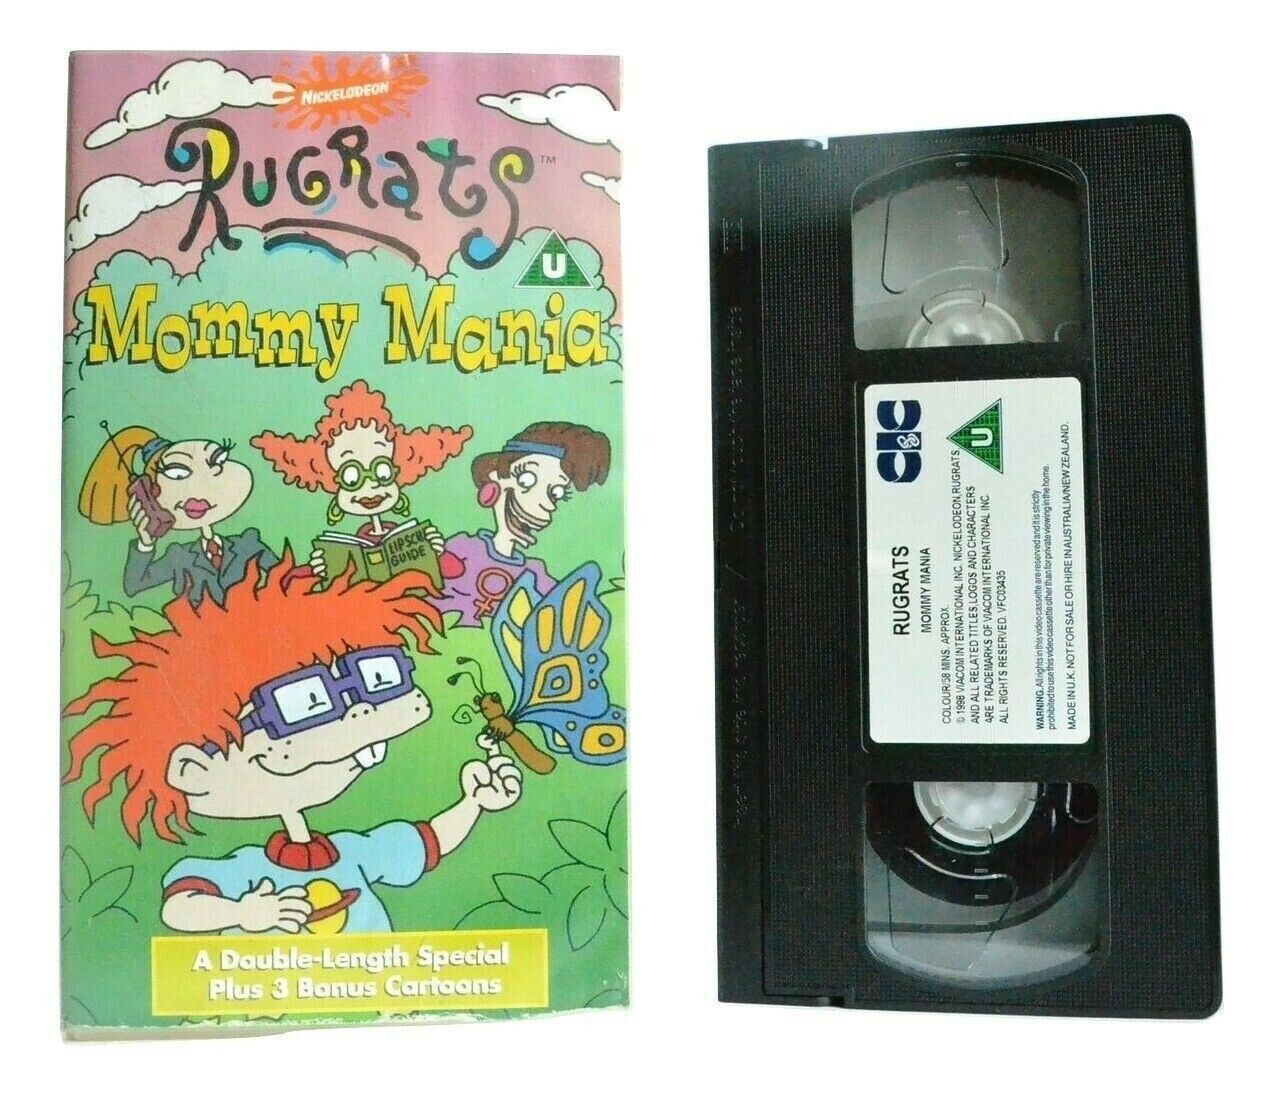 Rugrats: Mommy Mania (1998) - Special + Bonus Cartoons - Animated - Kids - VHS-